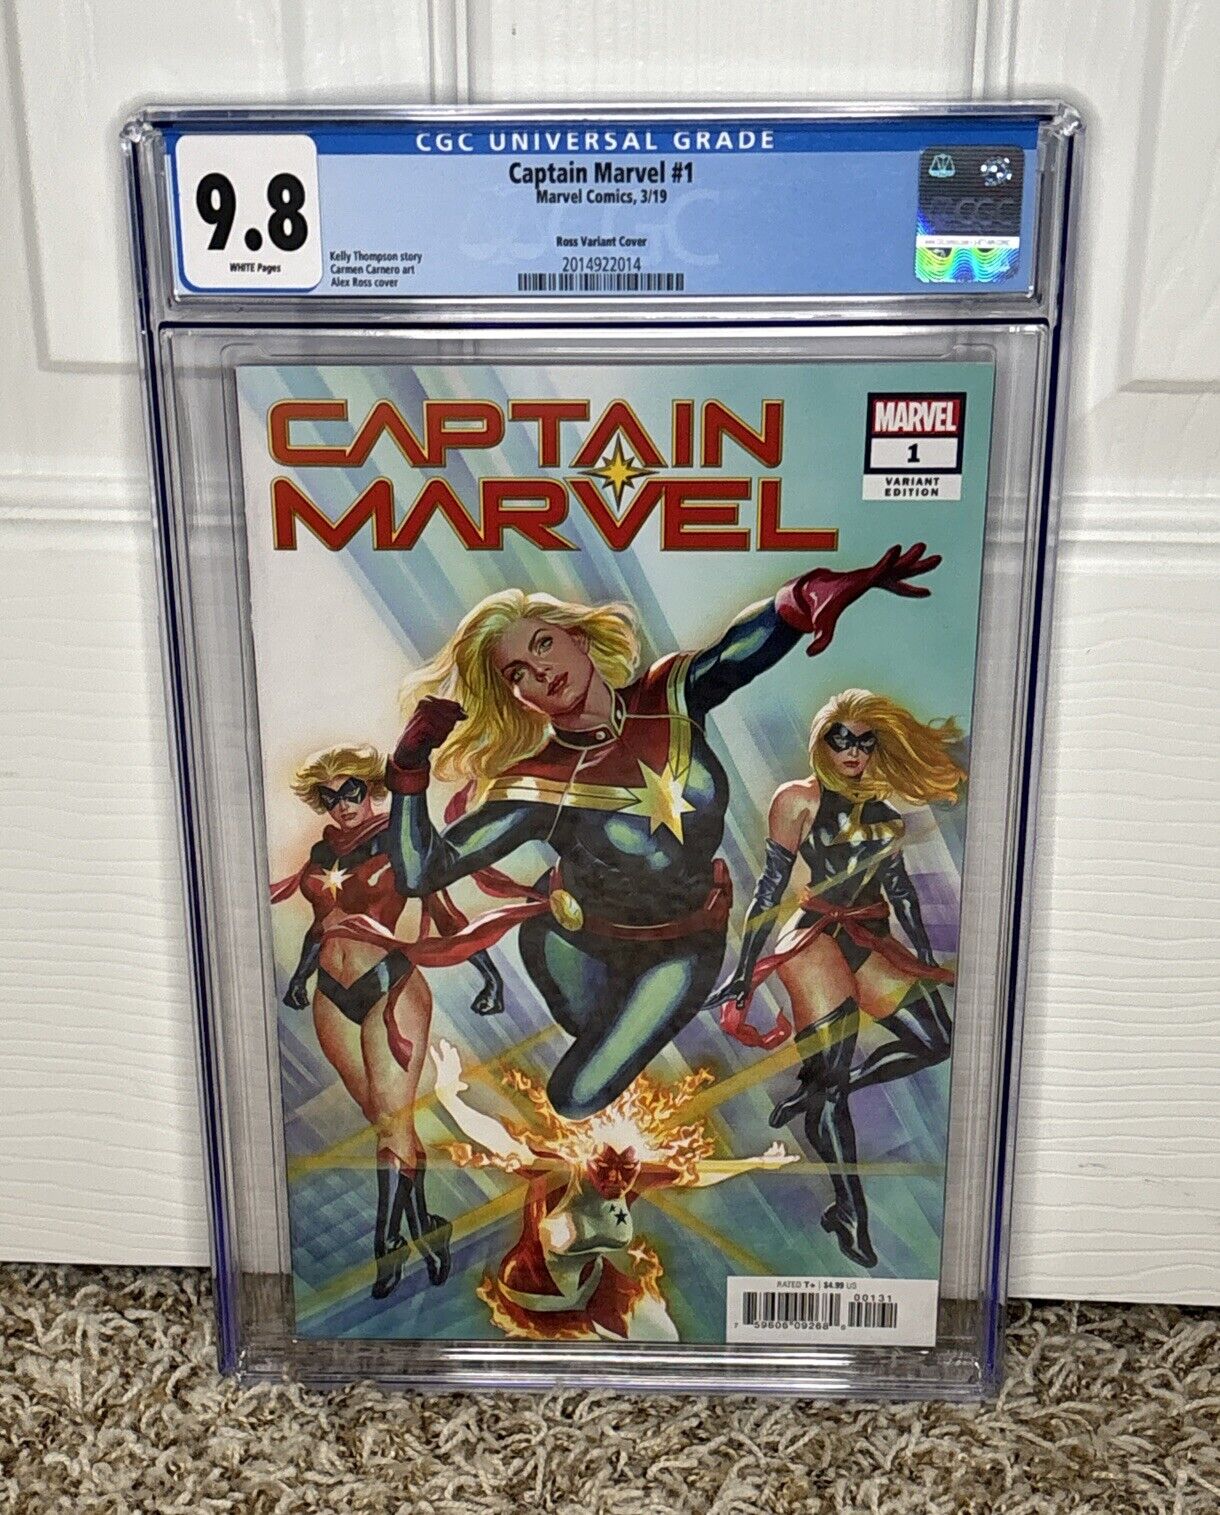 Captain Marvel #1 * rare 1:50 Alex Ross variant cover * graded CGC 9.8 * 2019